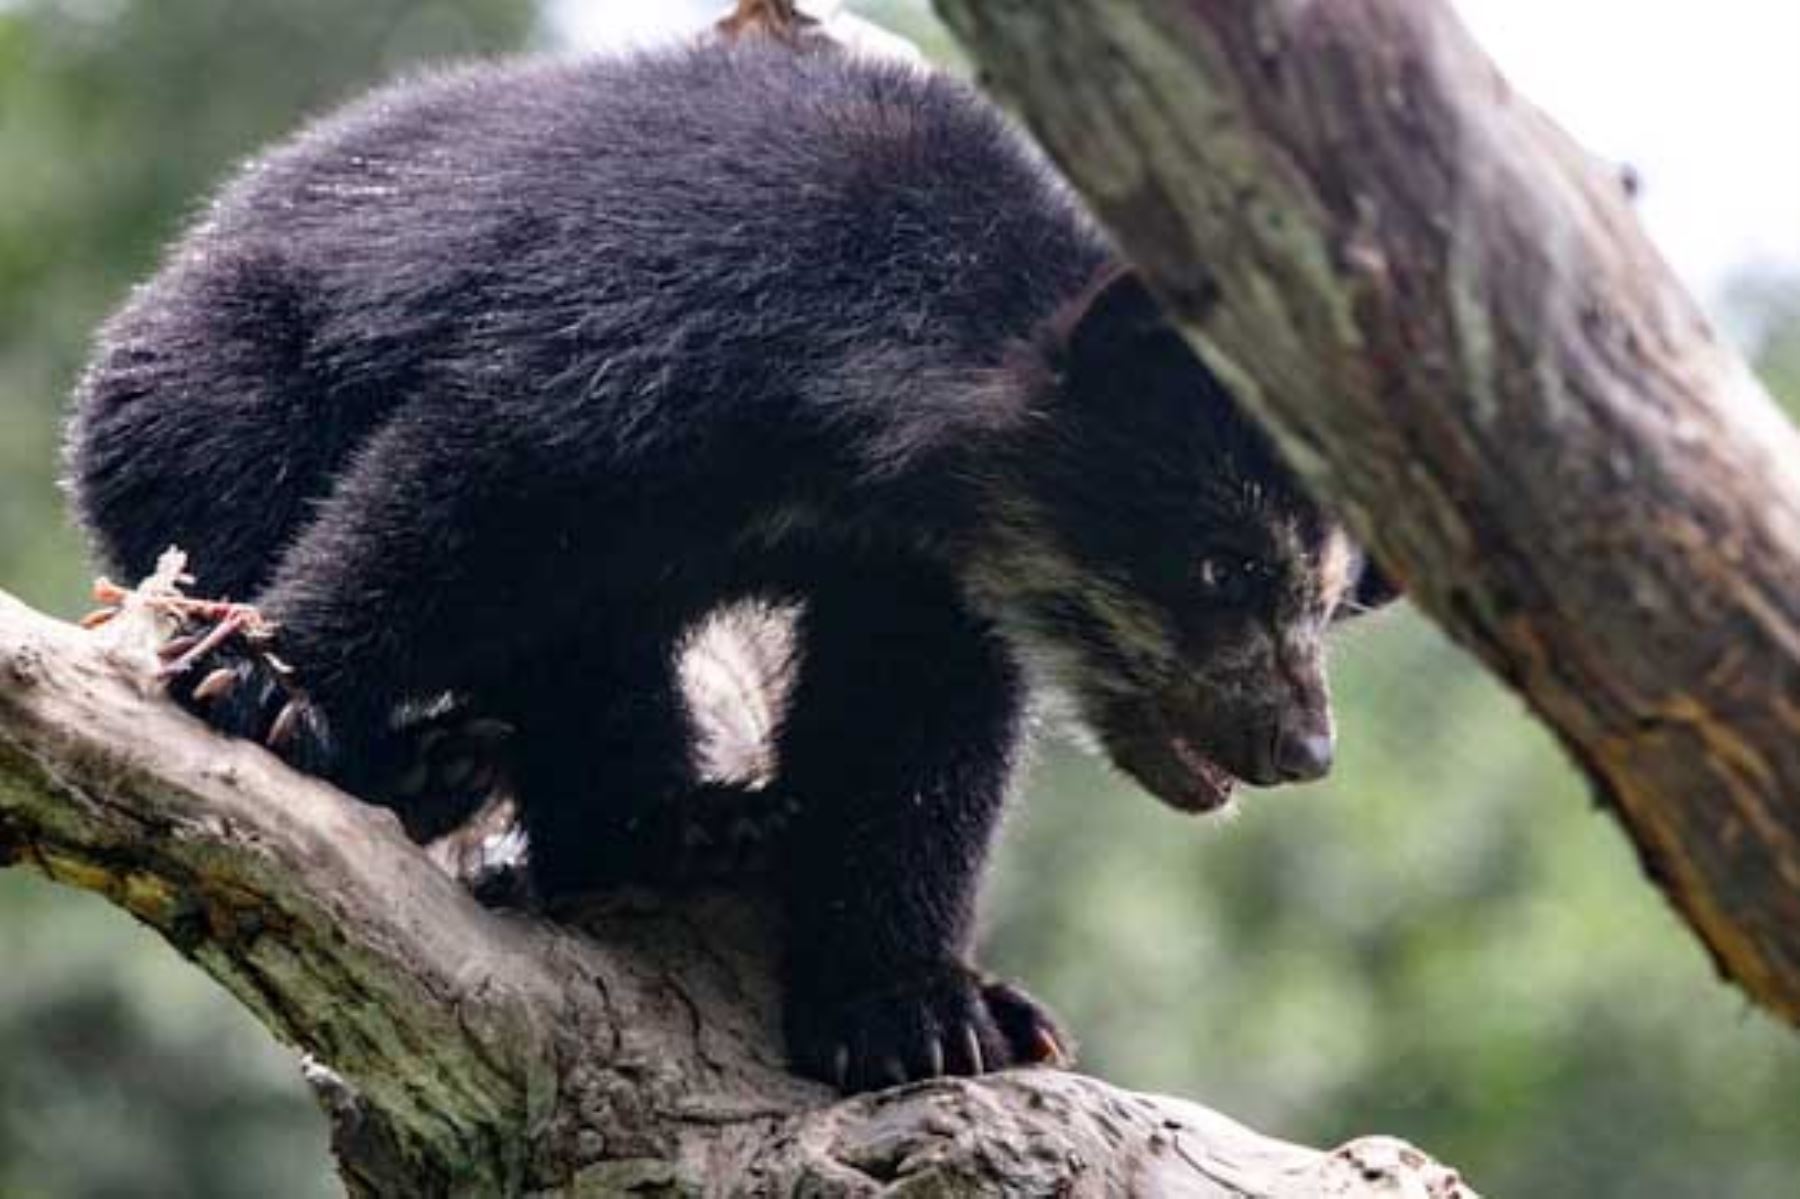 Serfor pide vivir en armonía con animales silvestres tras muerte de un oso andino